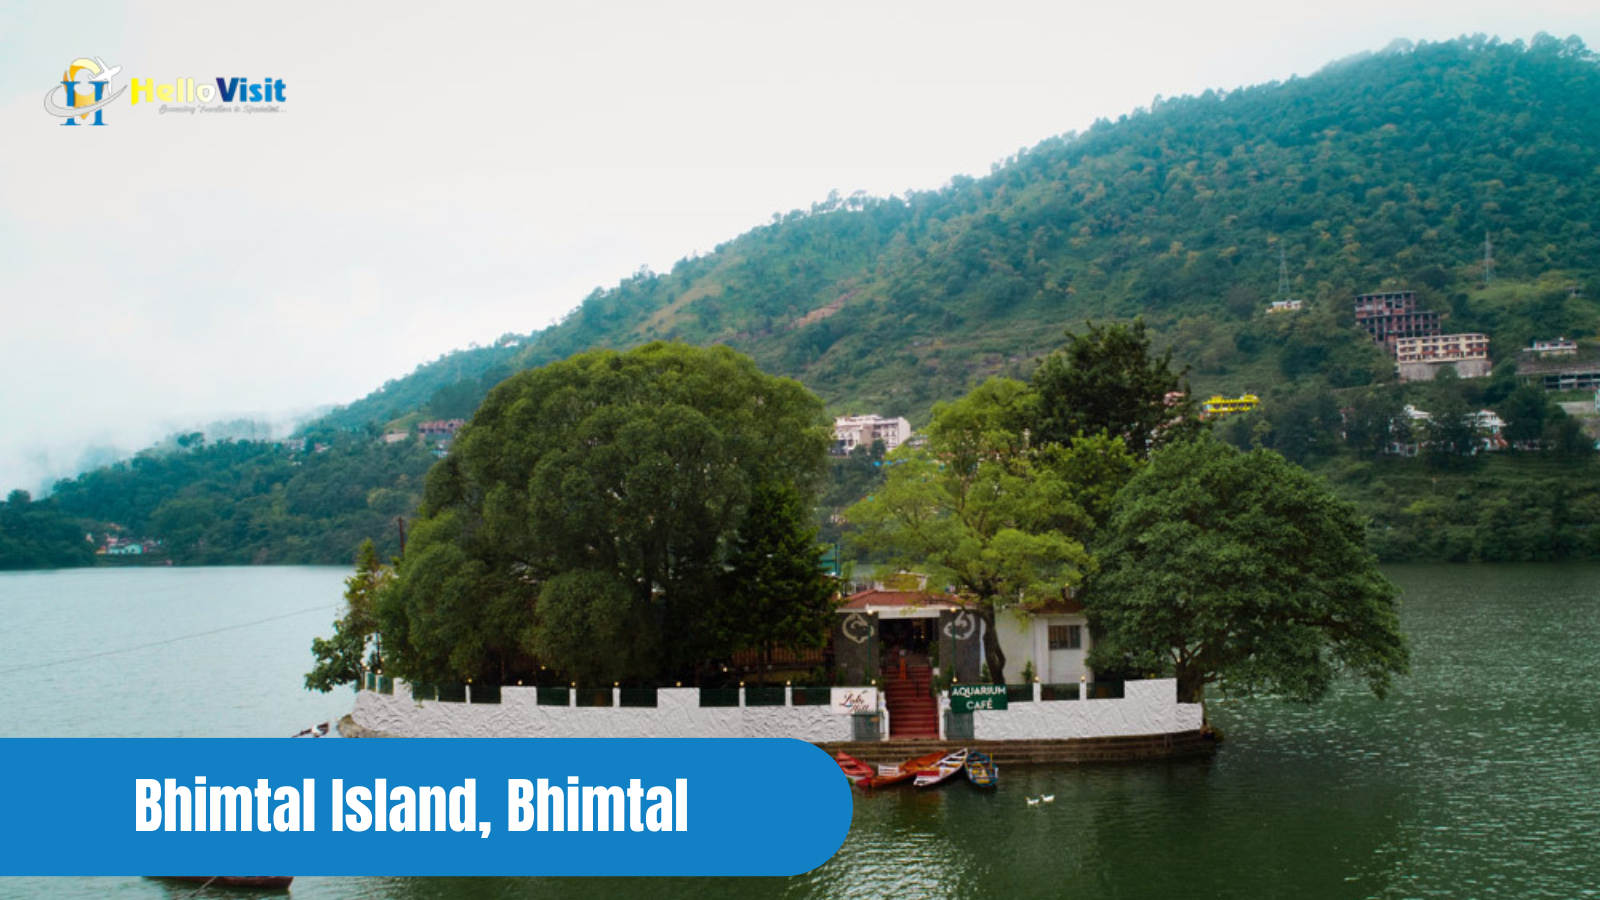 Bhimtal Island, Bhimtal